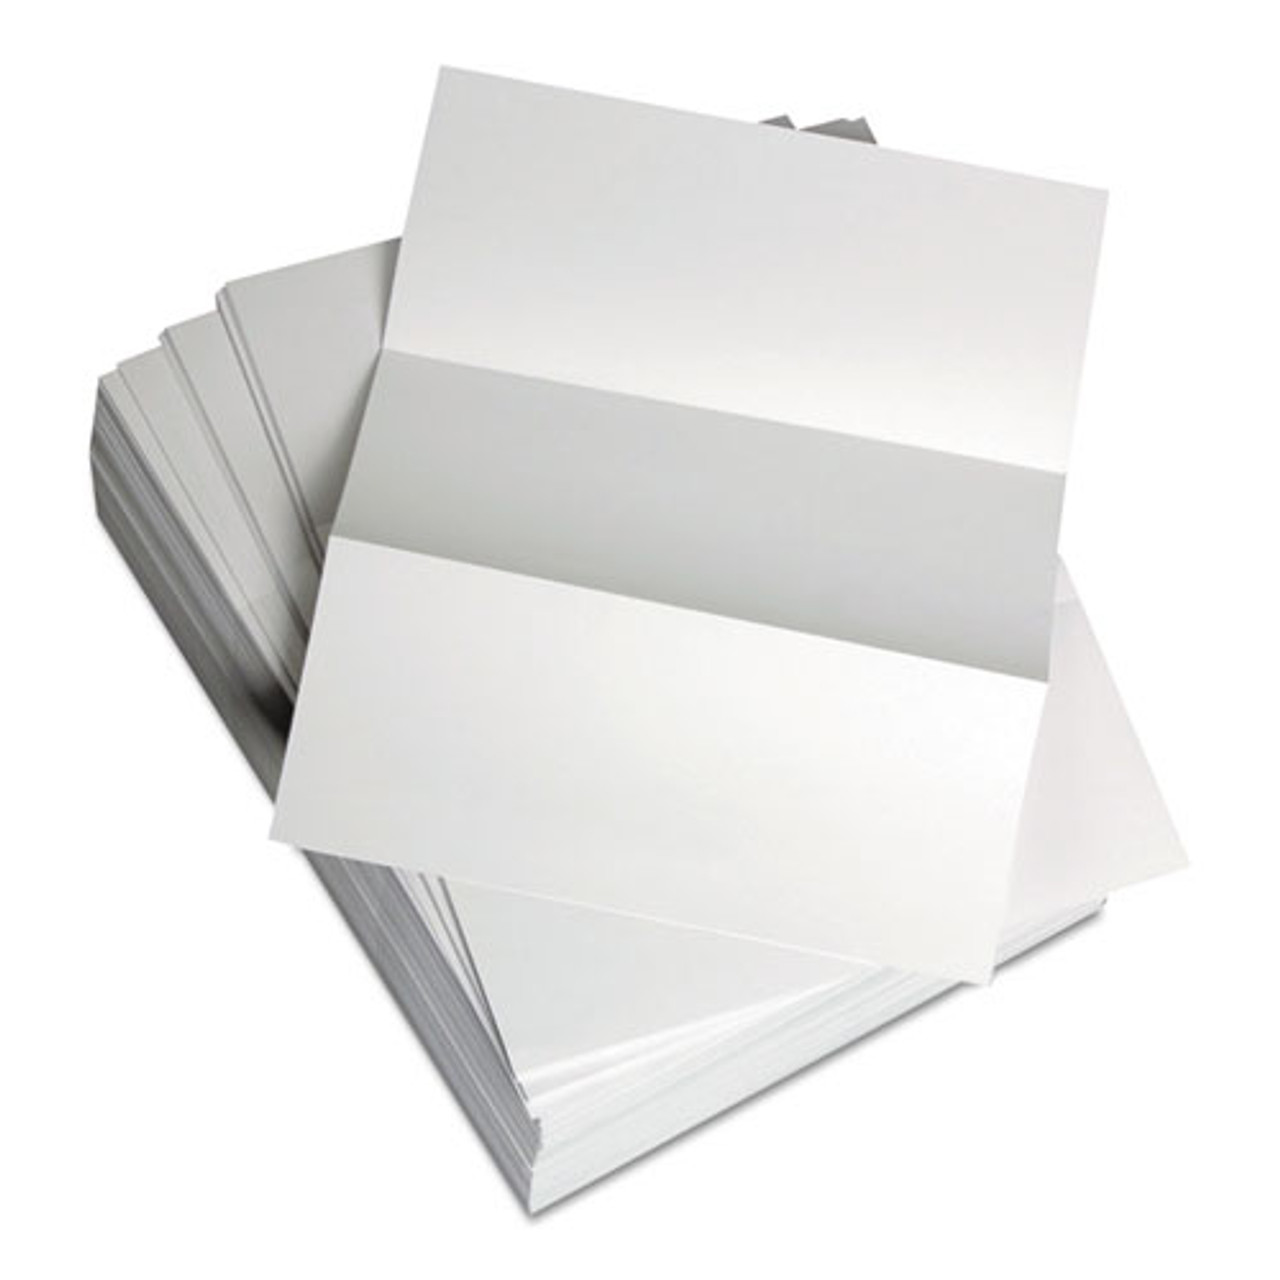 White Copy Paper, 8.5 x 11, 92 Bright, 20 lb., 5 Reams (2,500 Sheets)